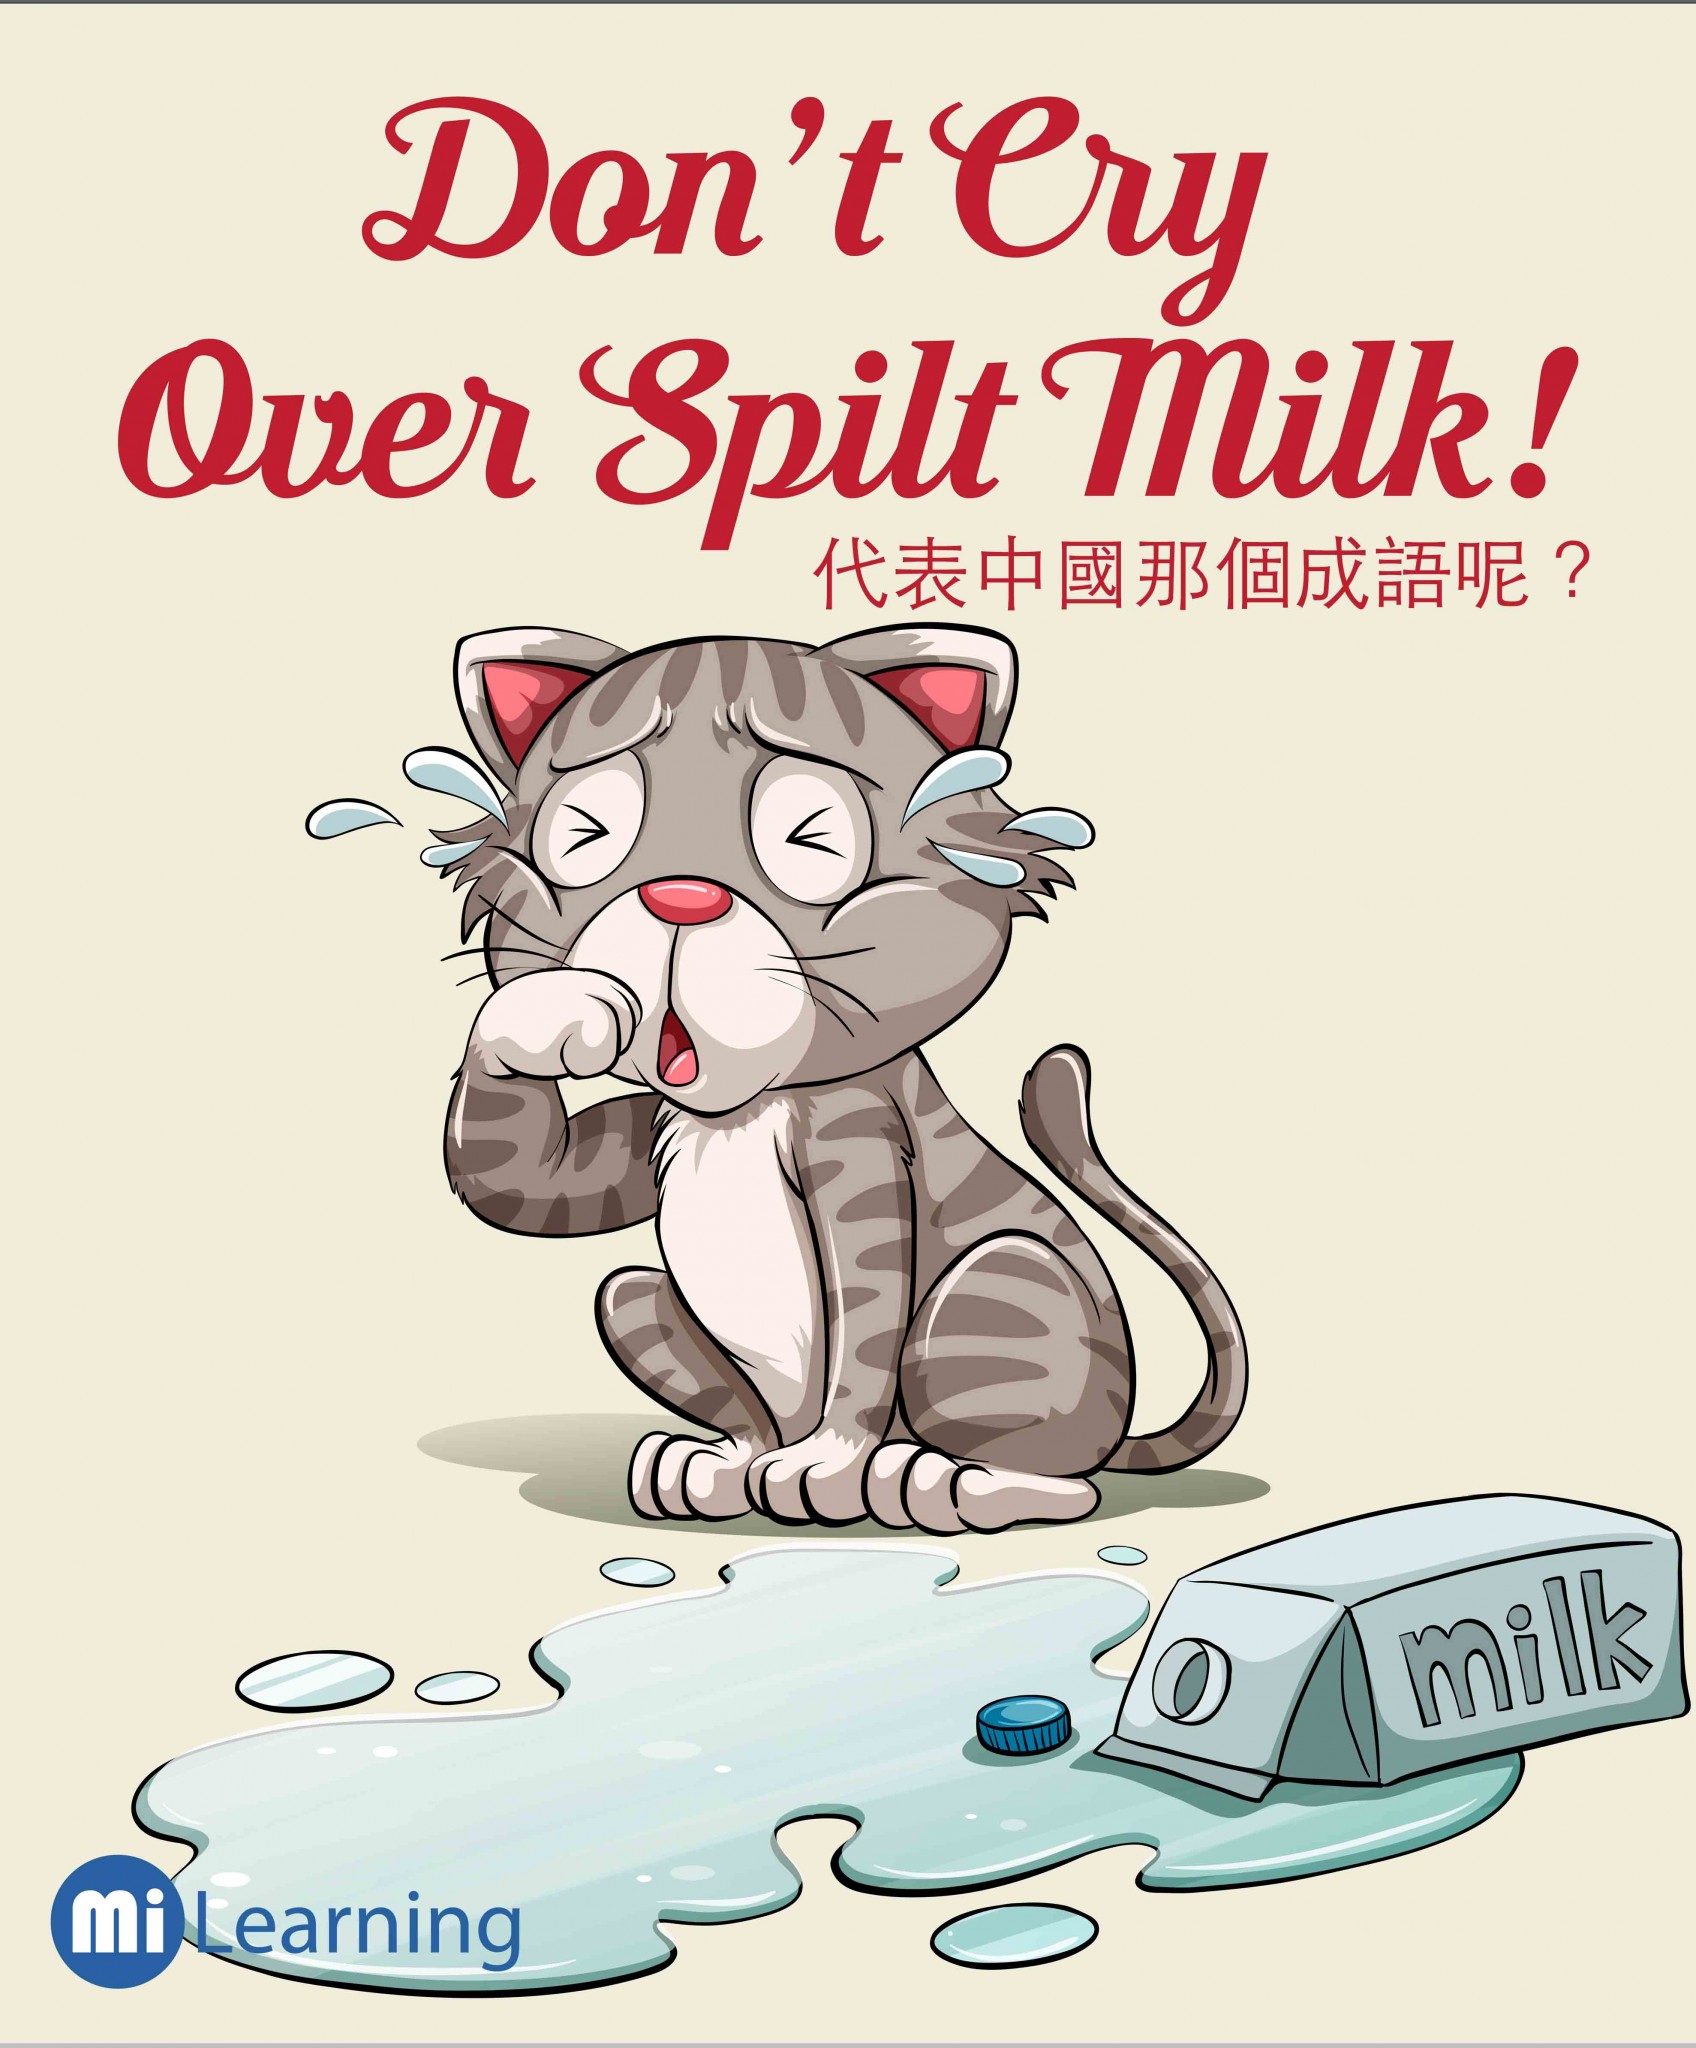 Don't cry over spilt milk代表中國那一個成語呢？